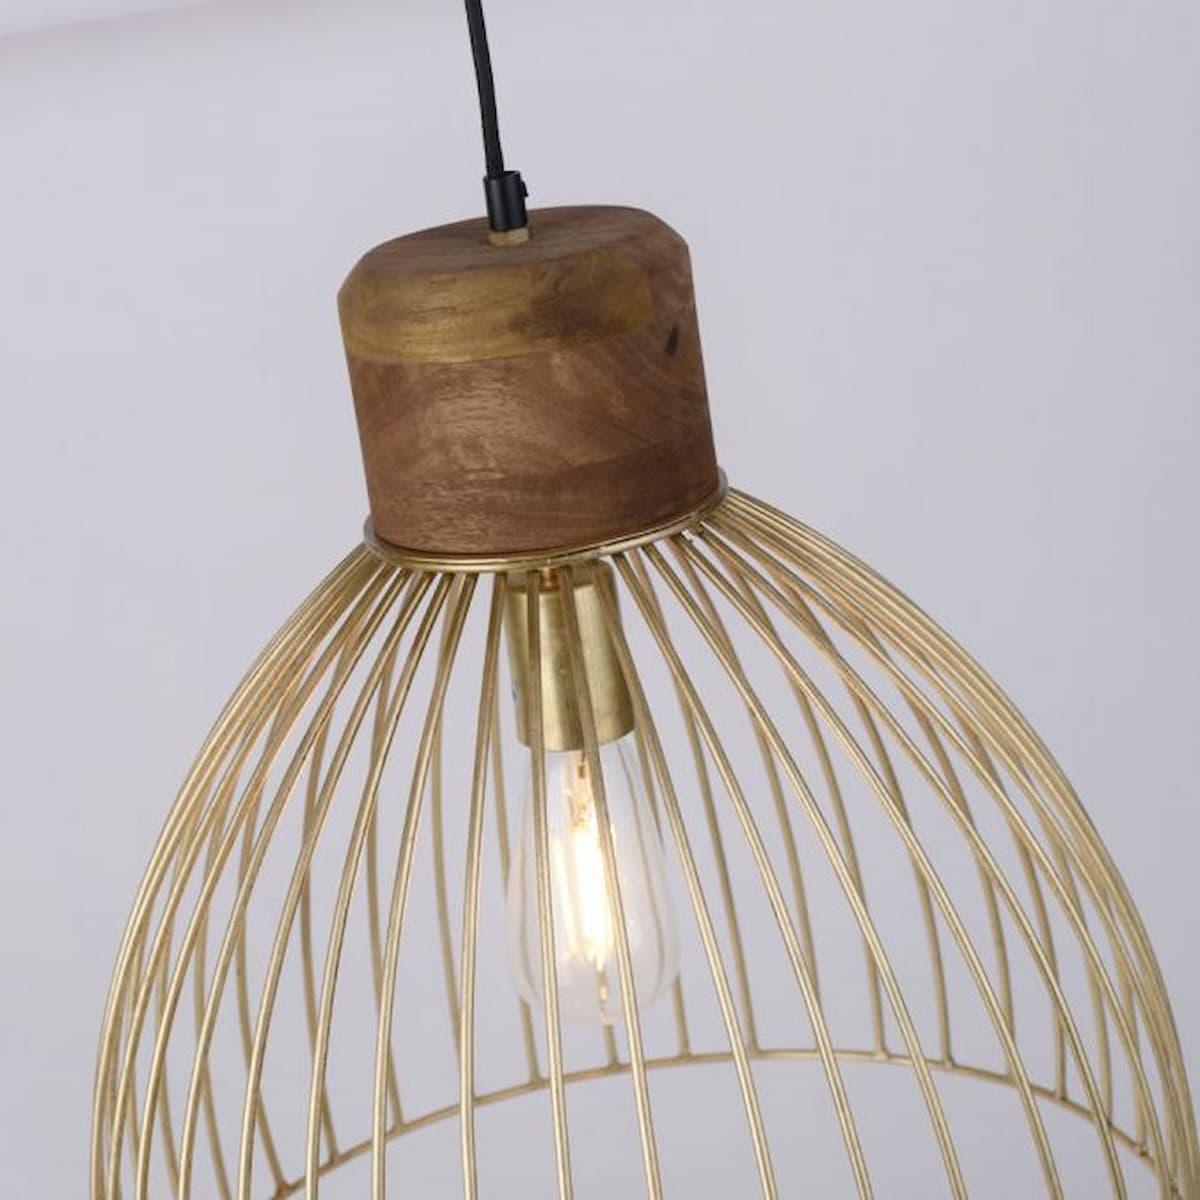 Pendant lamp, brass, Ø 40cm, mango wood, industrial look - 11489-60